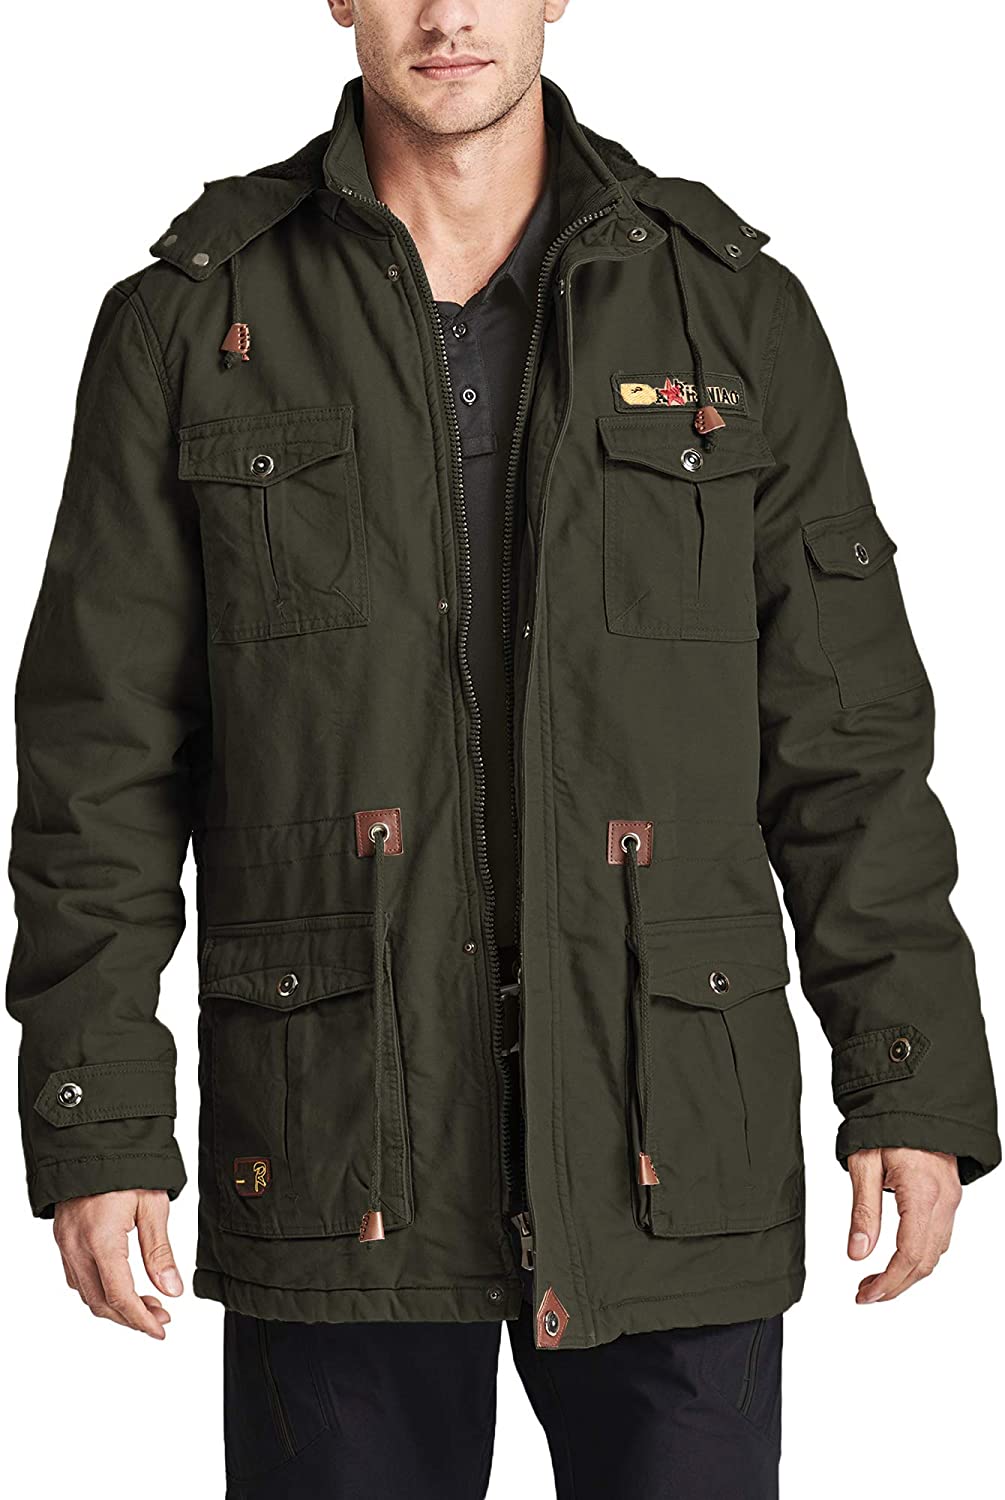 Men's Winter Cargo Jacket with Multi Pockets Thicken Military Jackets eBay